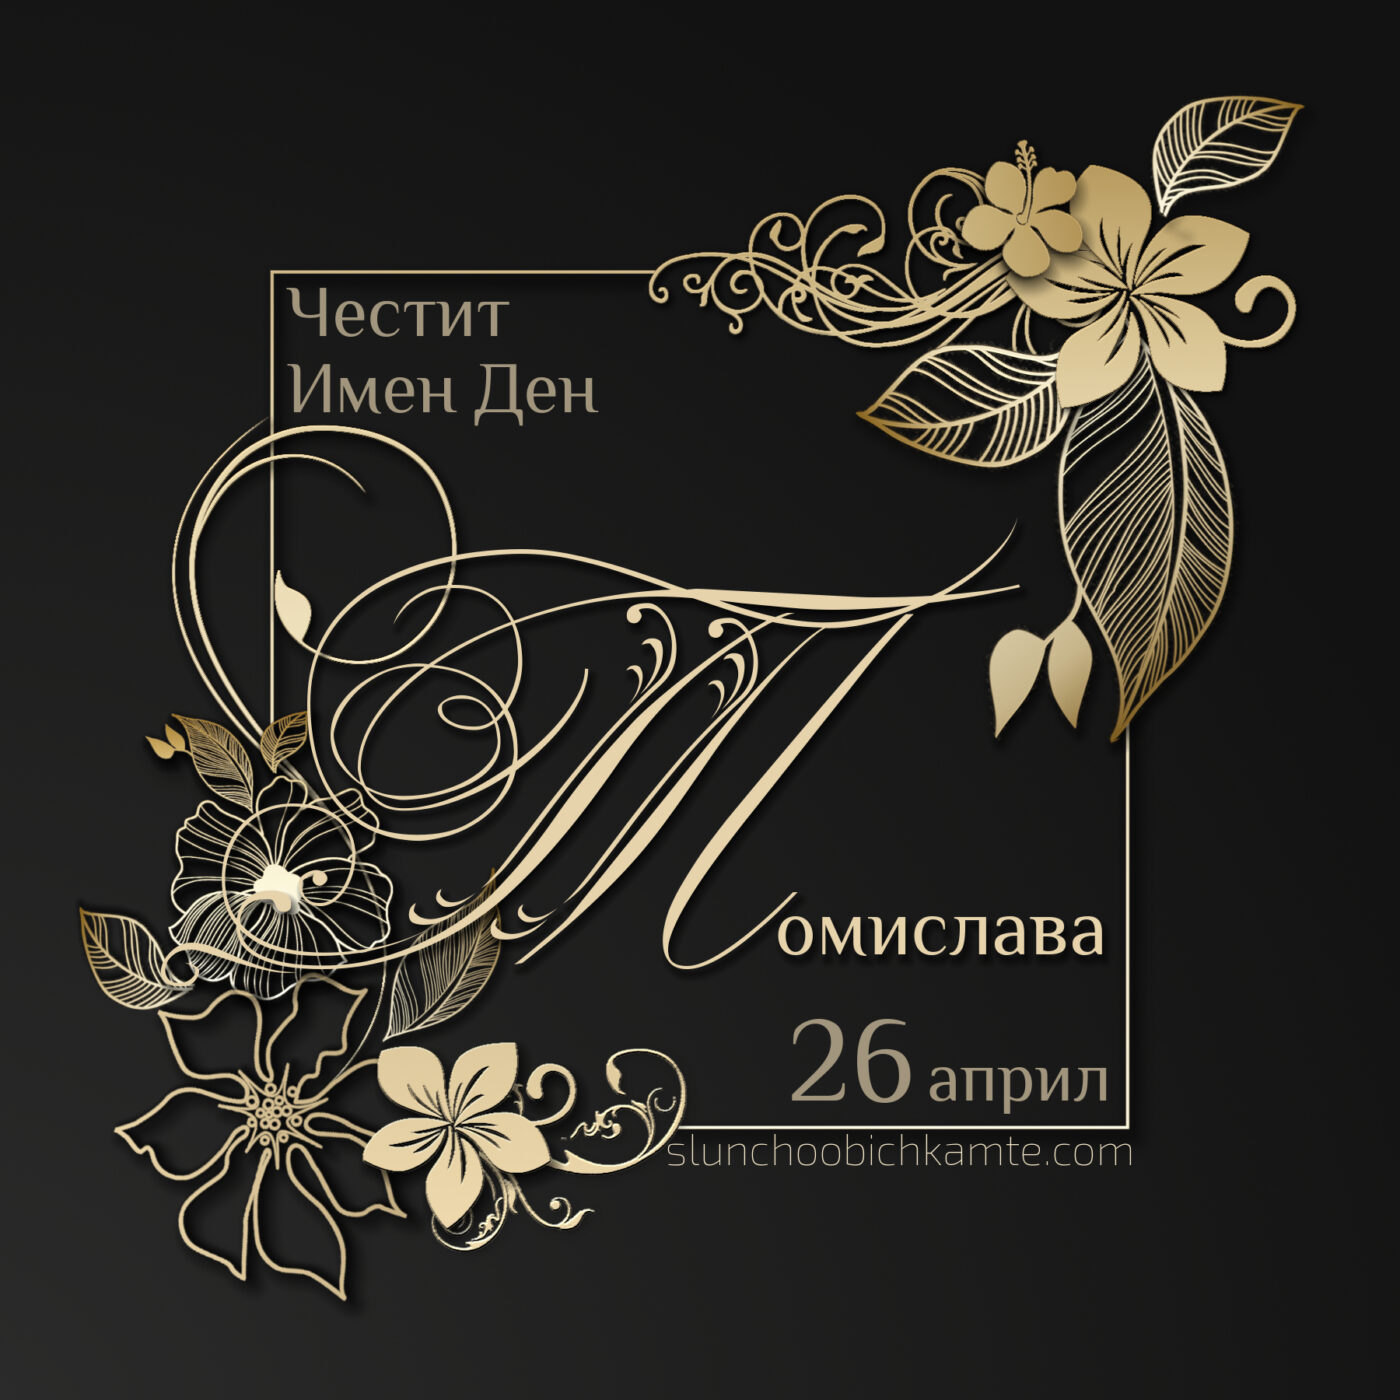 Честит имен ден Томислава - 26 април - Картички за Имен ден. Пожелай честит имен ден с оригинална картичка